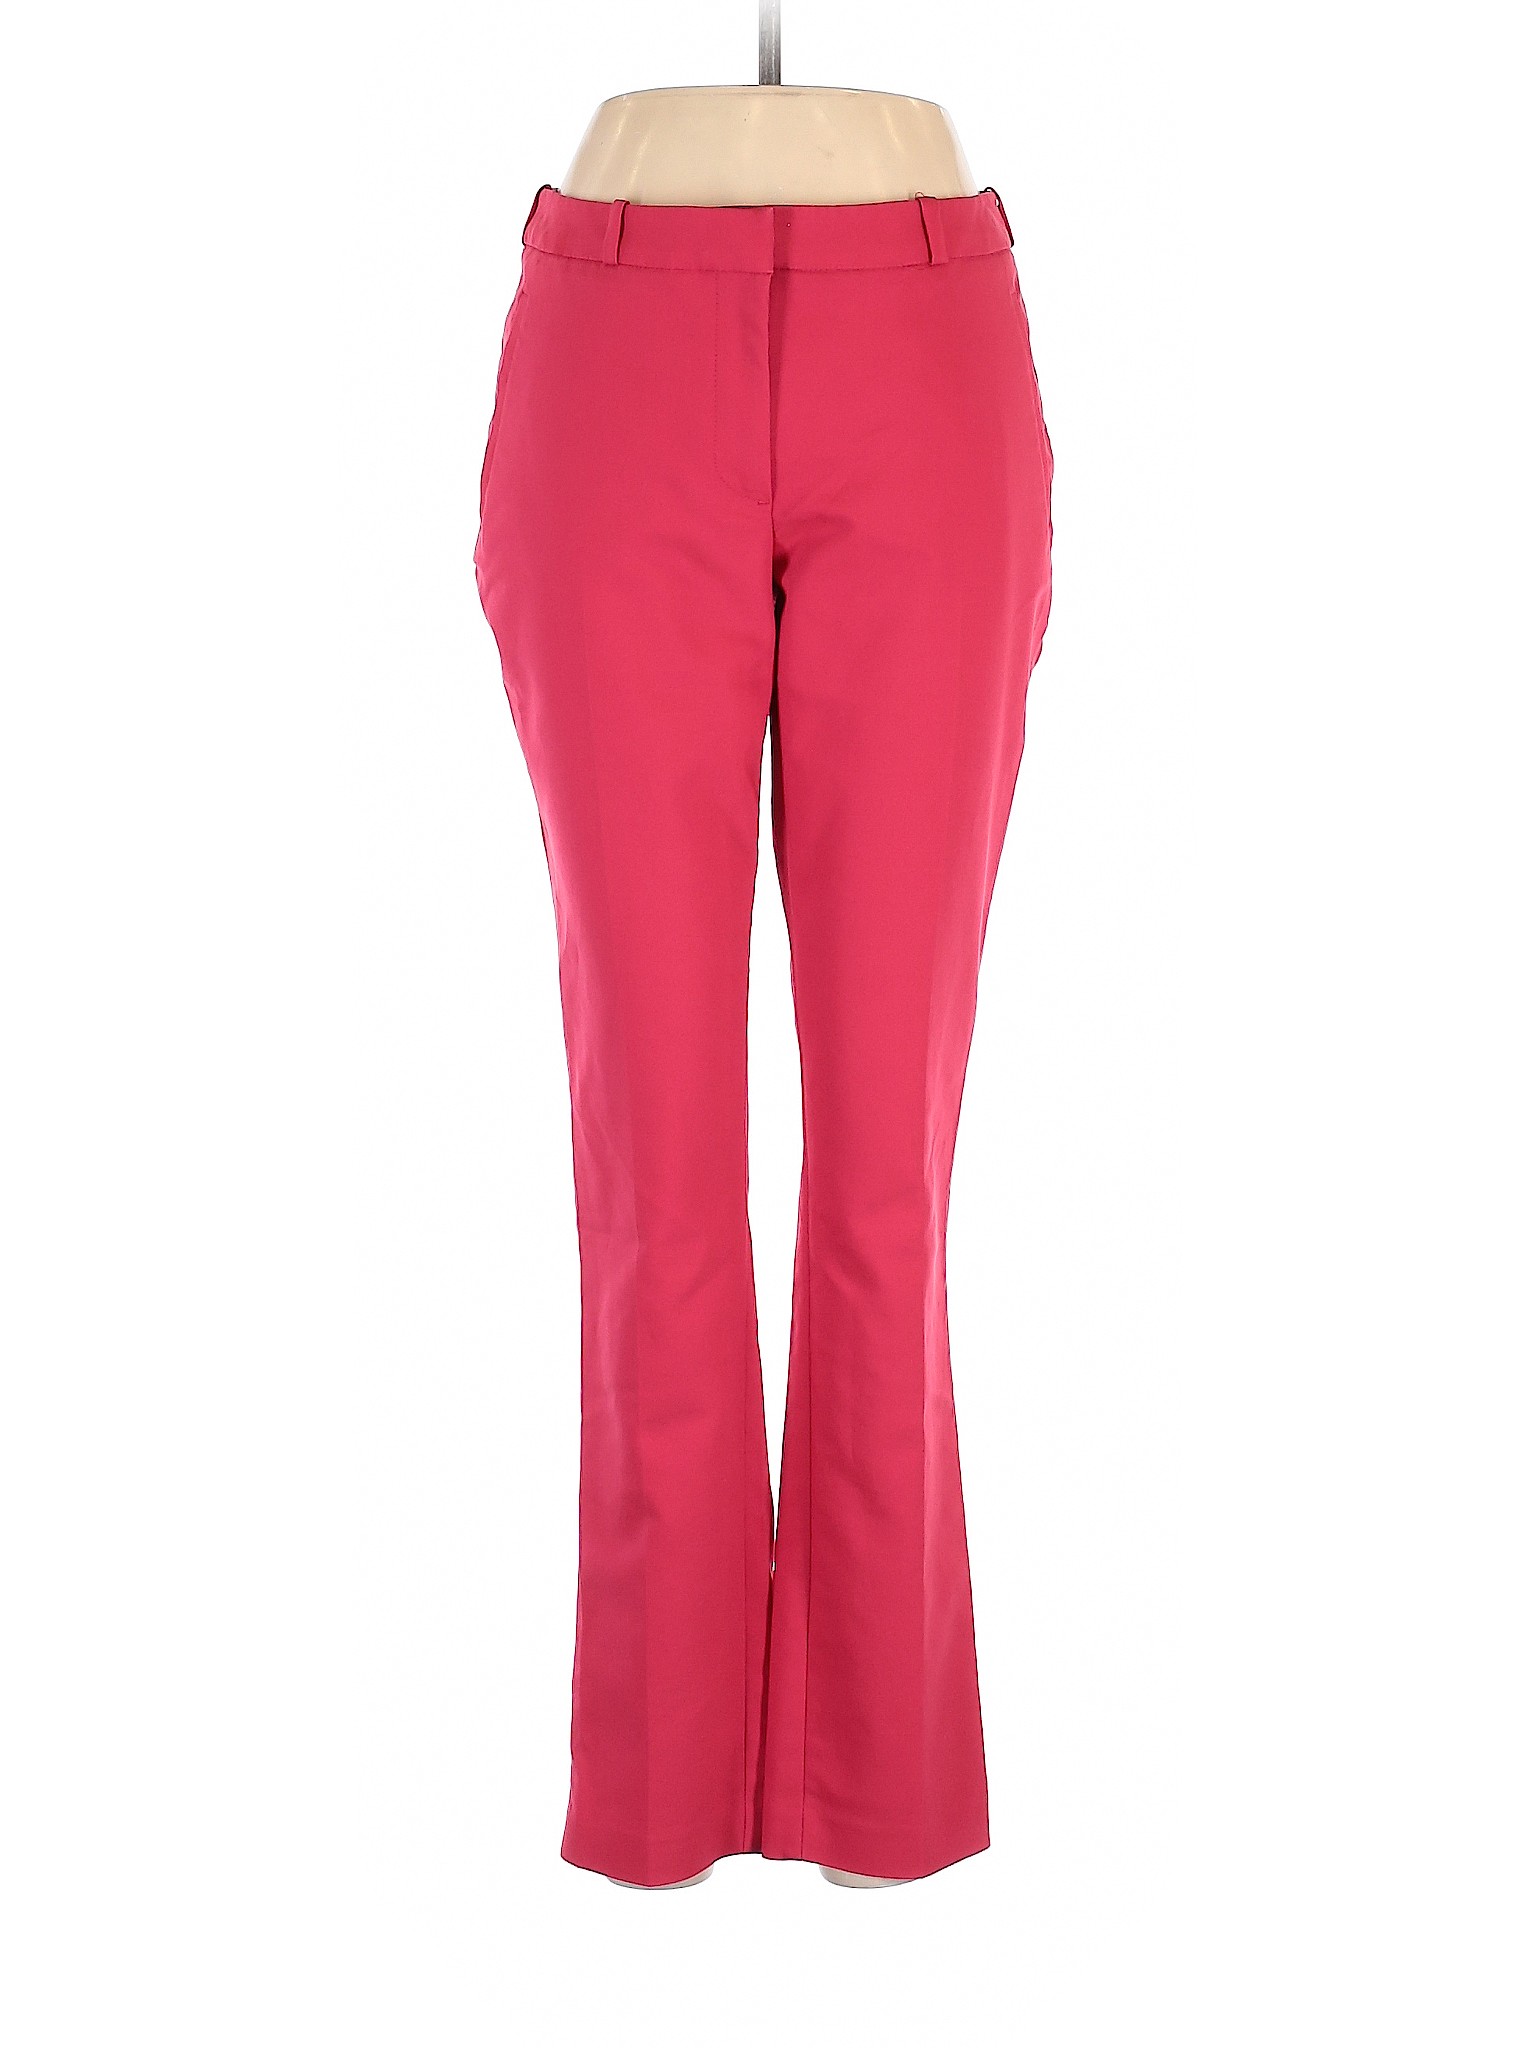 H&M Women Red Dress Pants 6 | eBay